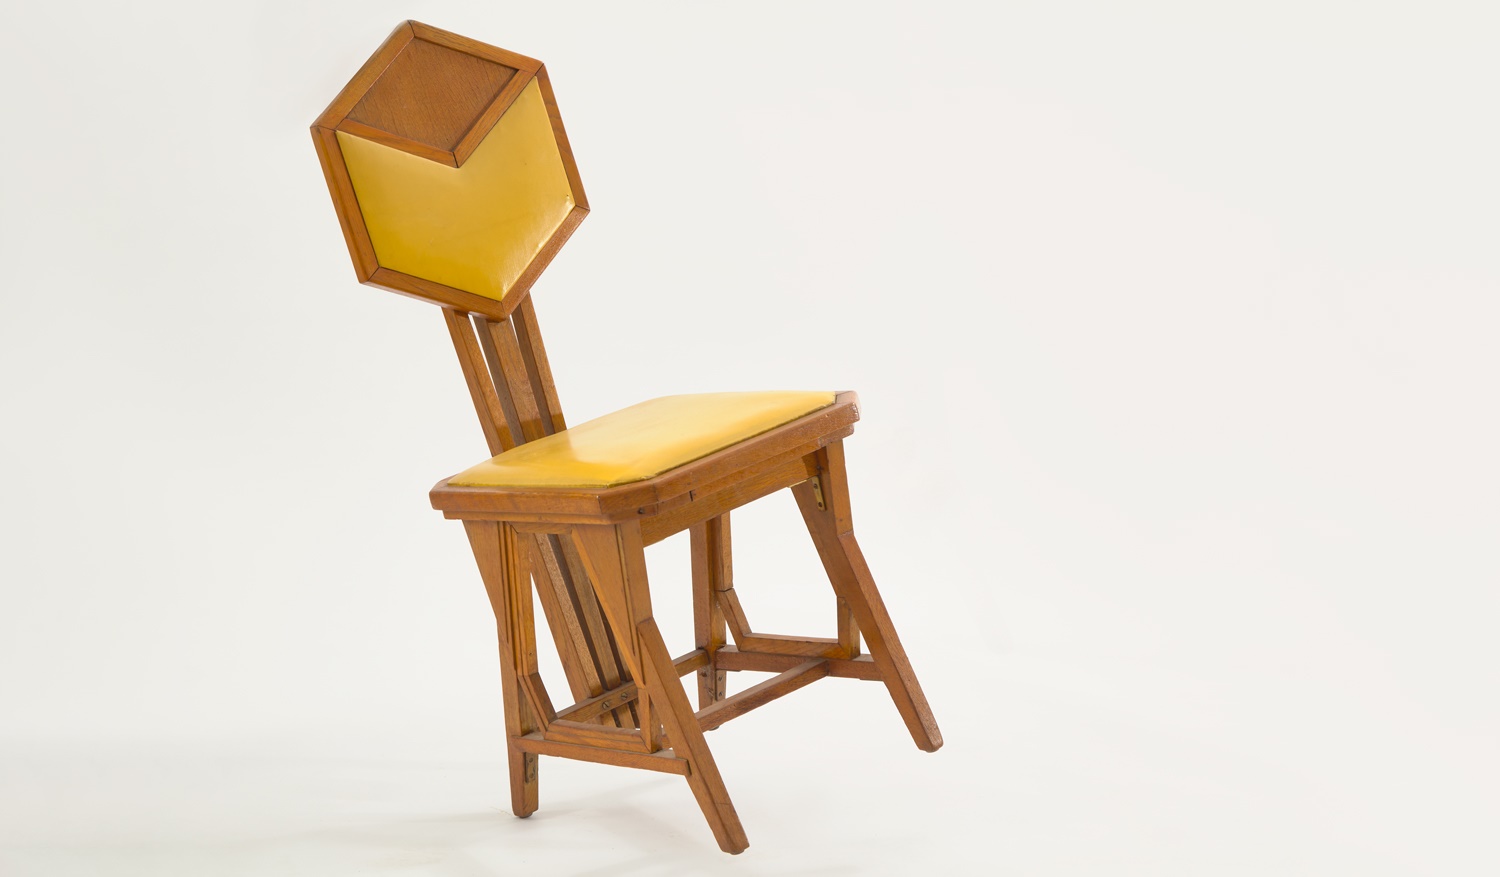 The Furniture of Frank Lloyd Wright